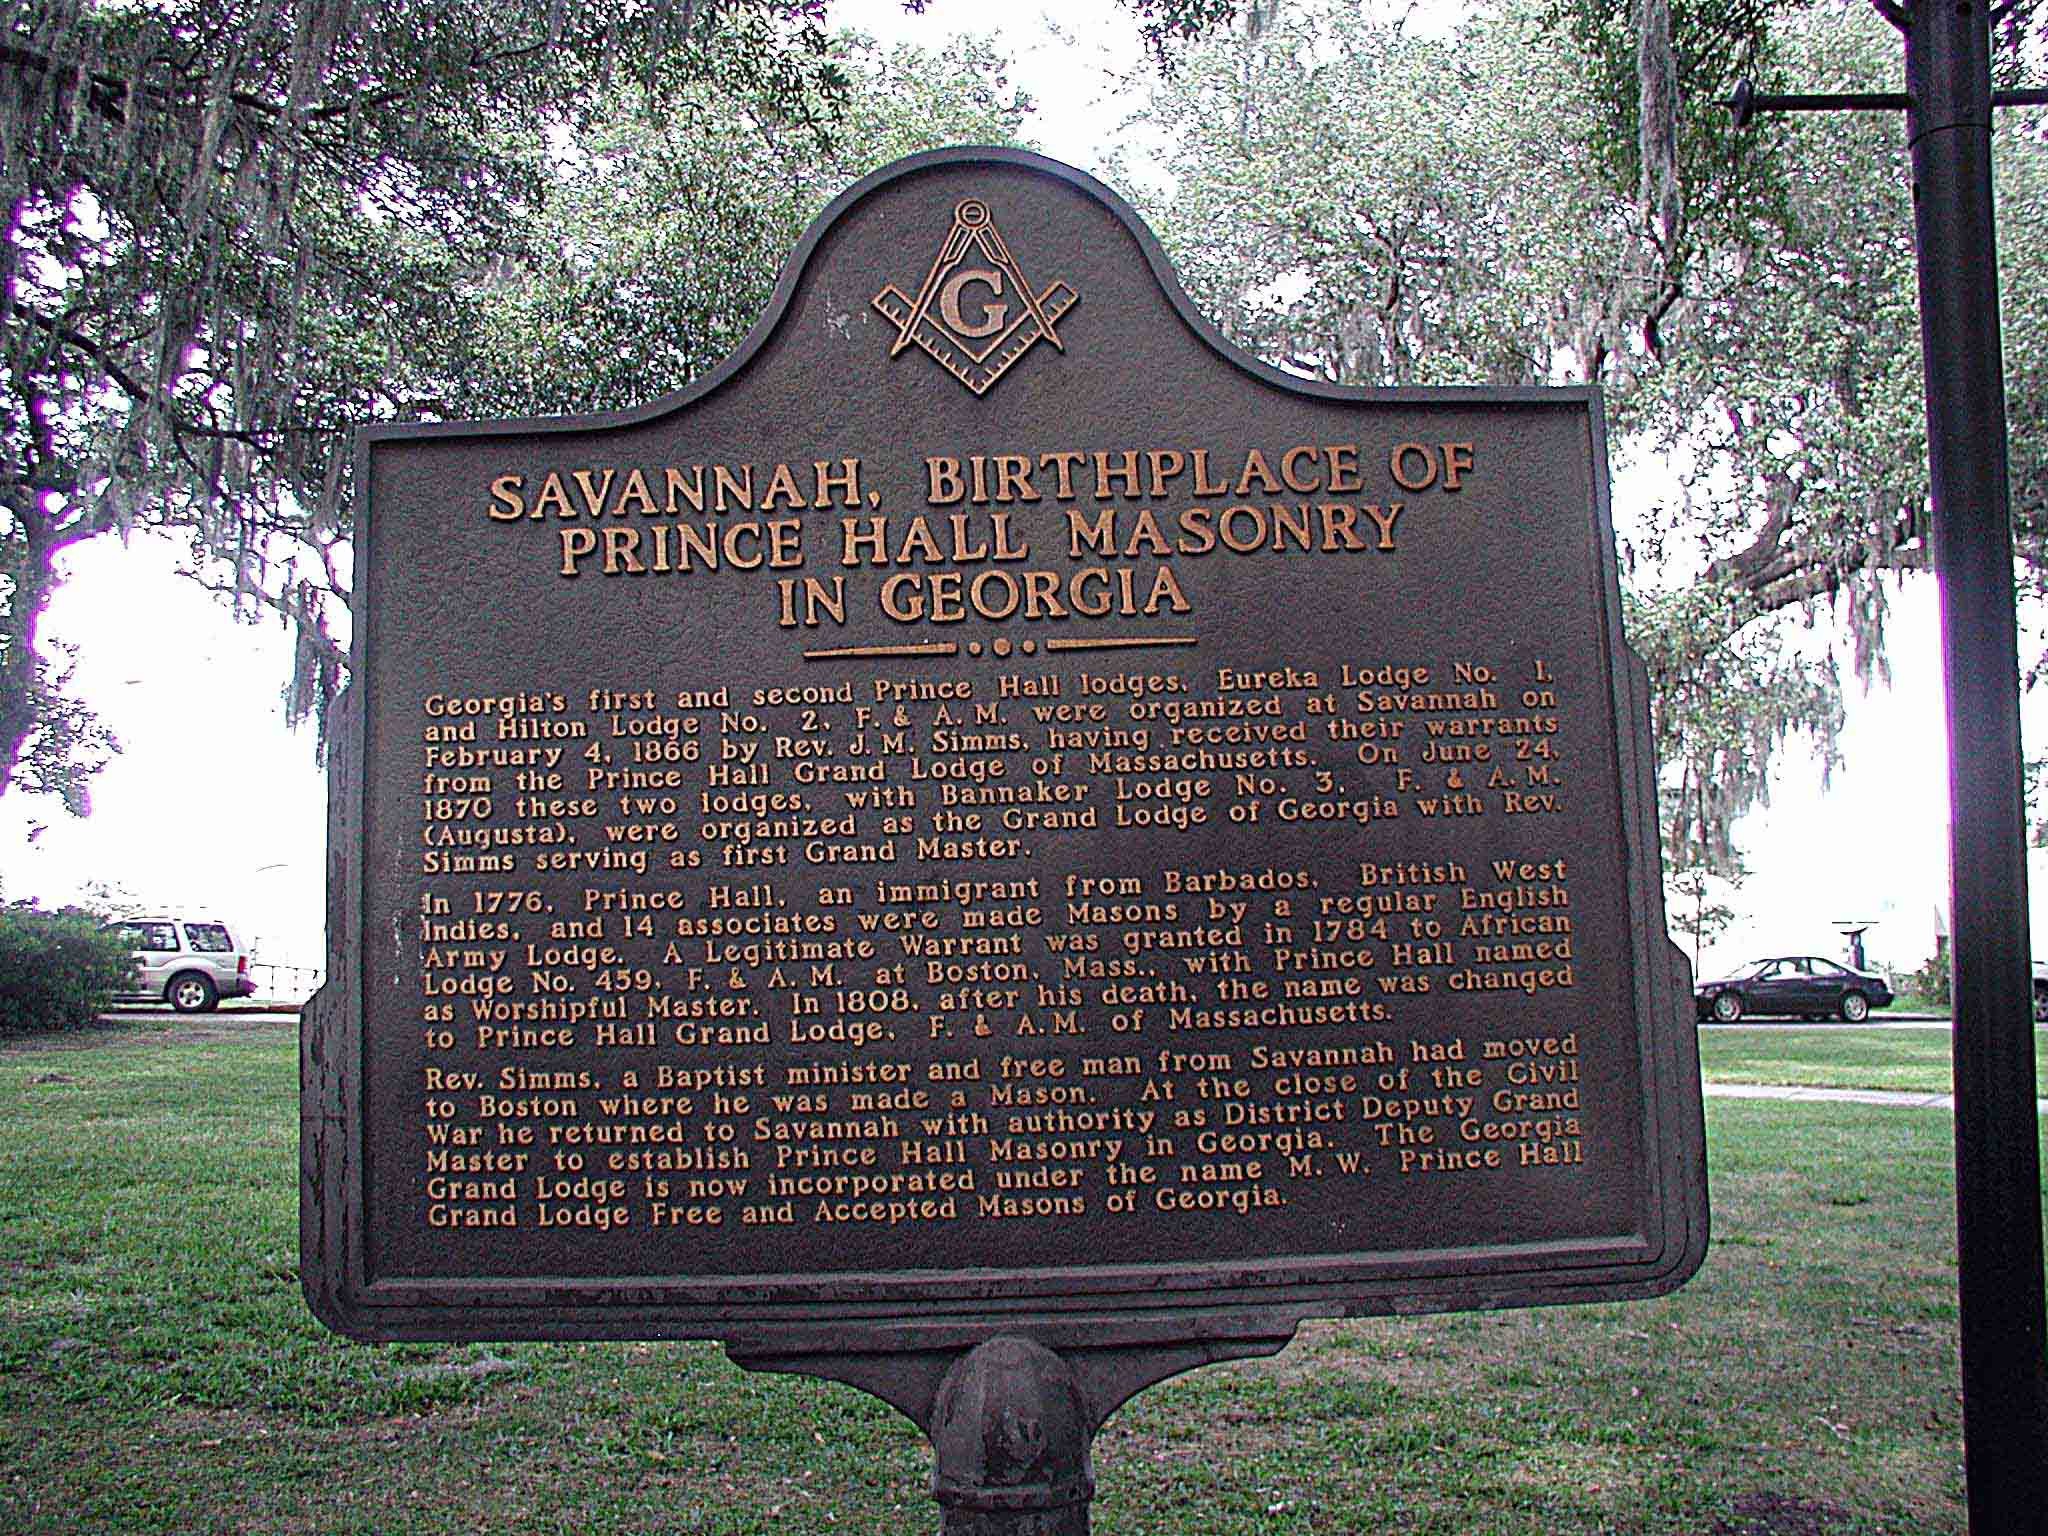 2048x1536 Savannah, Birthplace of Prince Hall Masonry in Georgia Marker